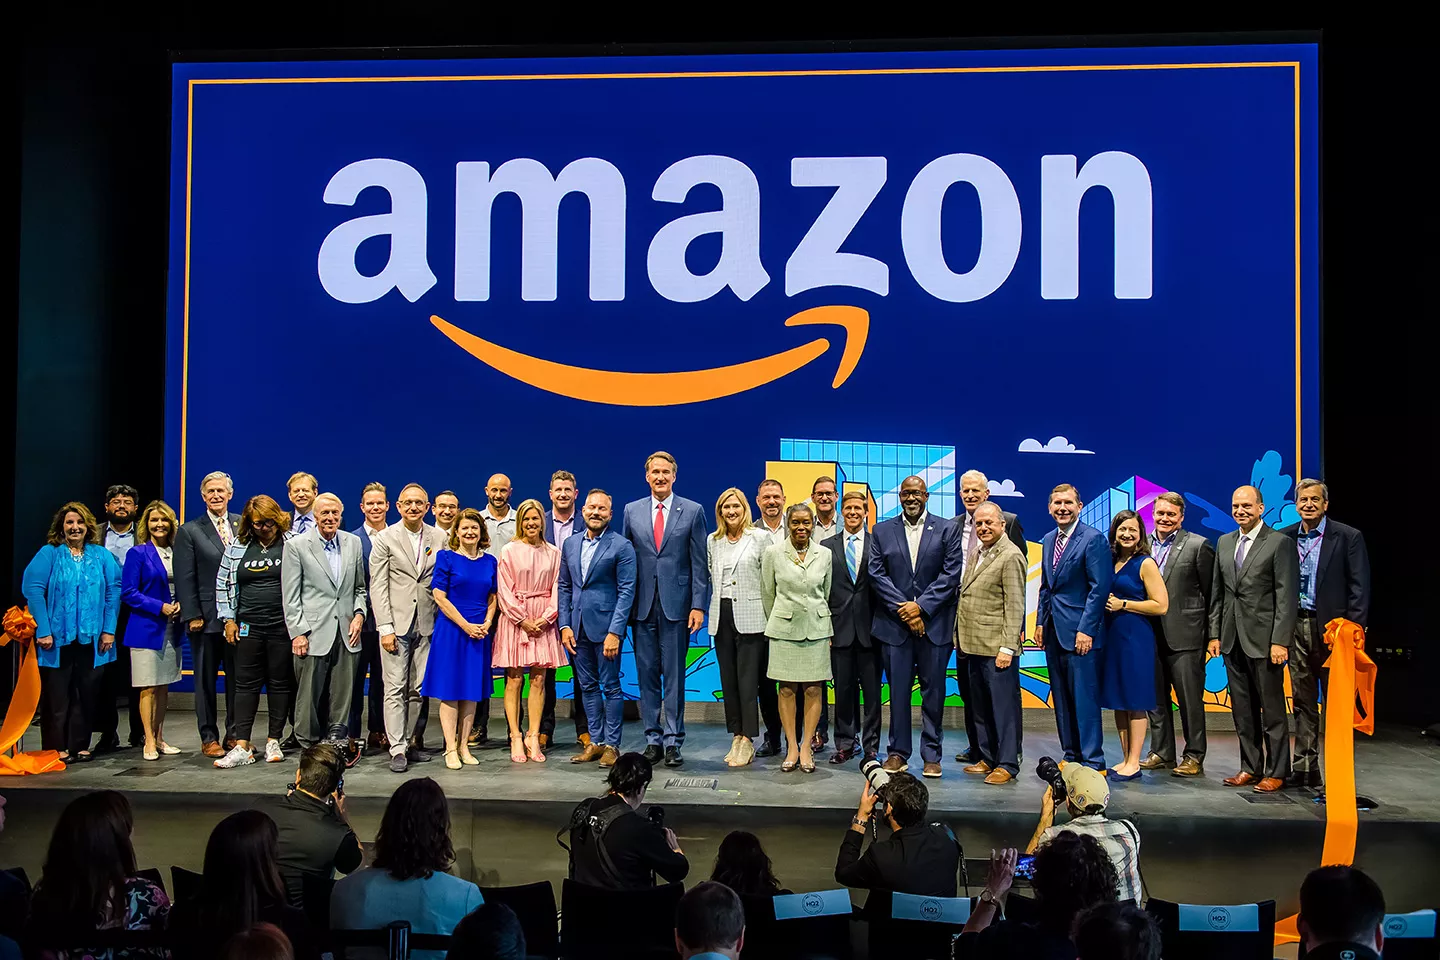 Amazon Second Headquarters Opening